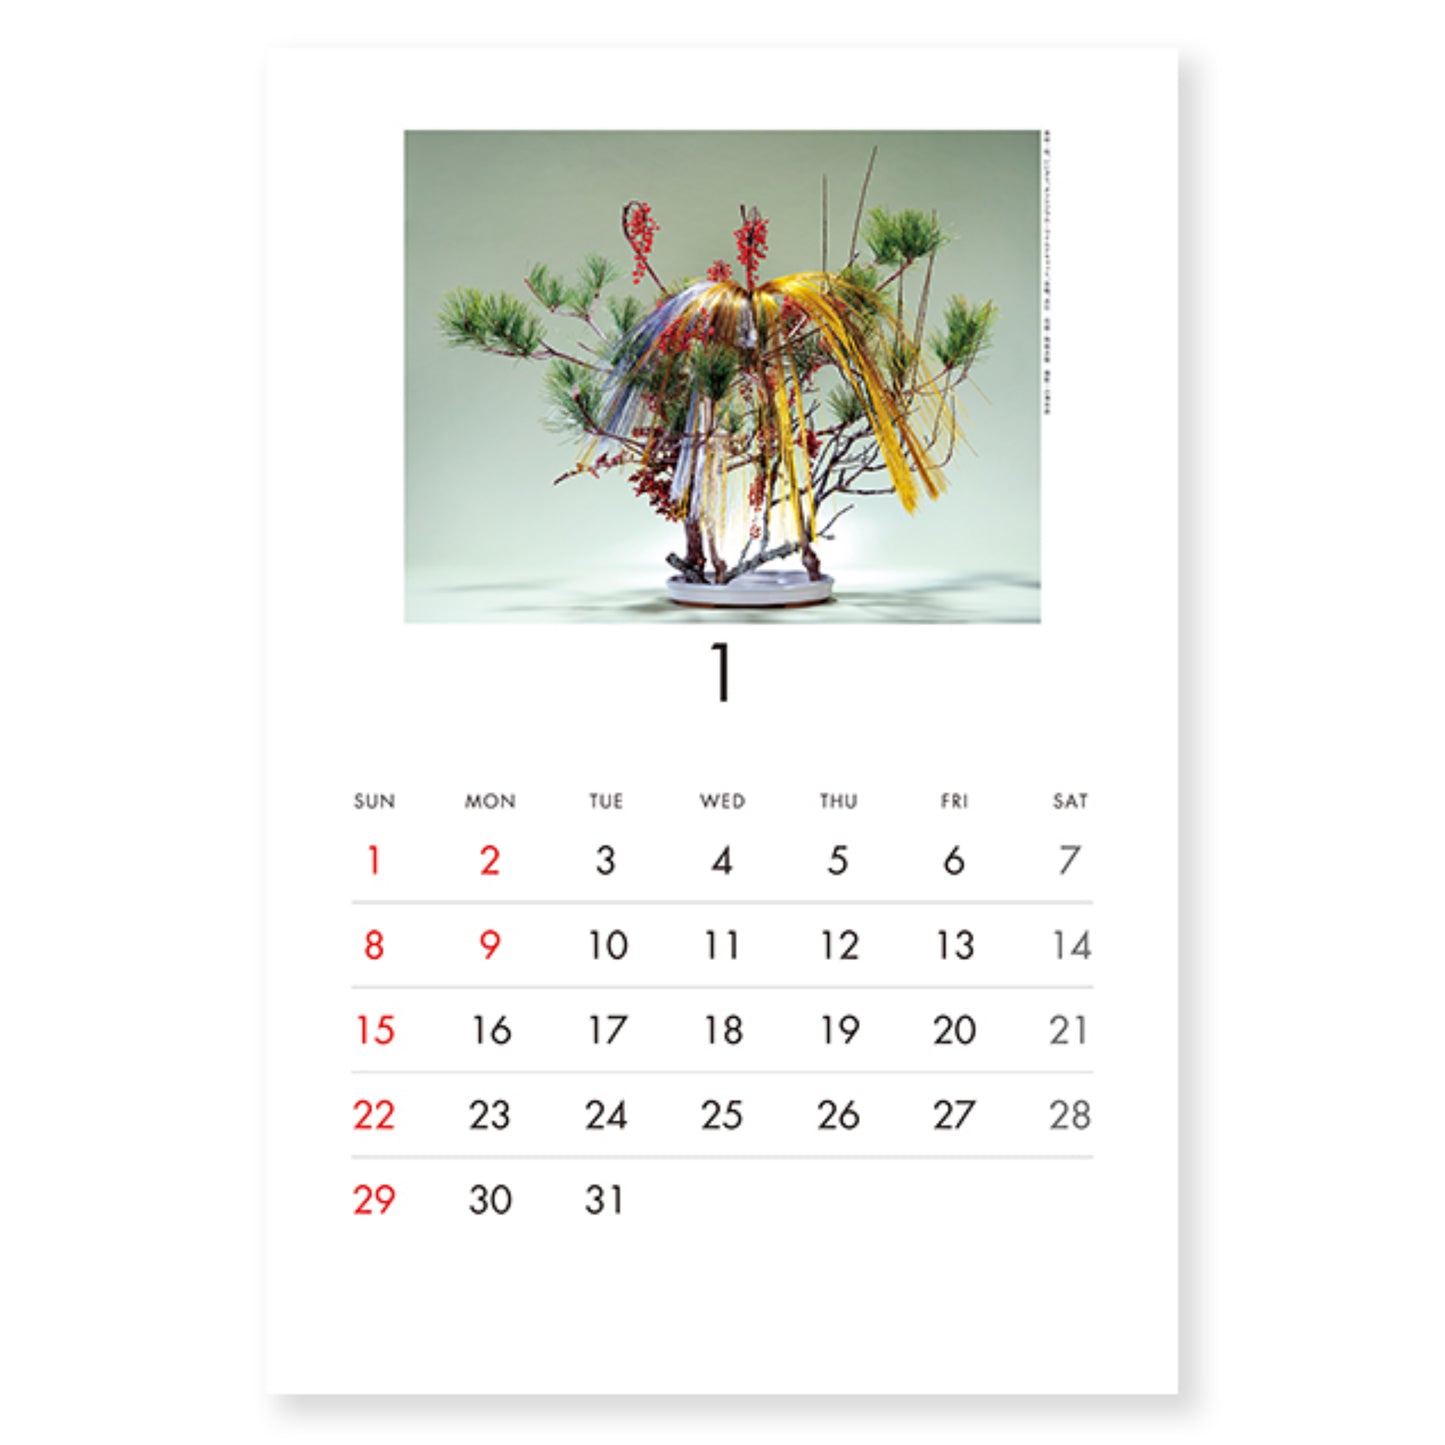 Sogetsu Calendar 2023 "Akane Teshigahara 12 Selections of Flowers"